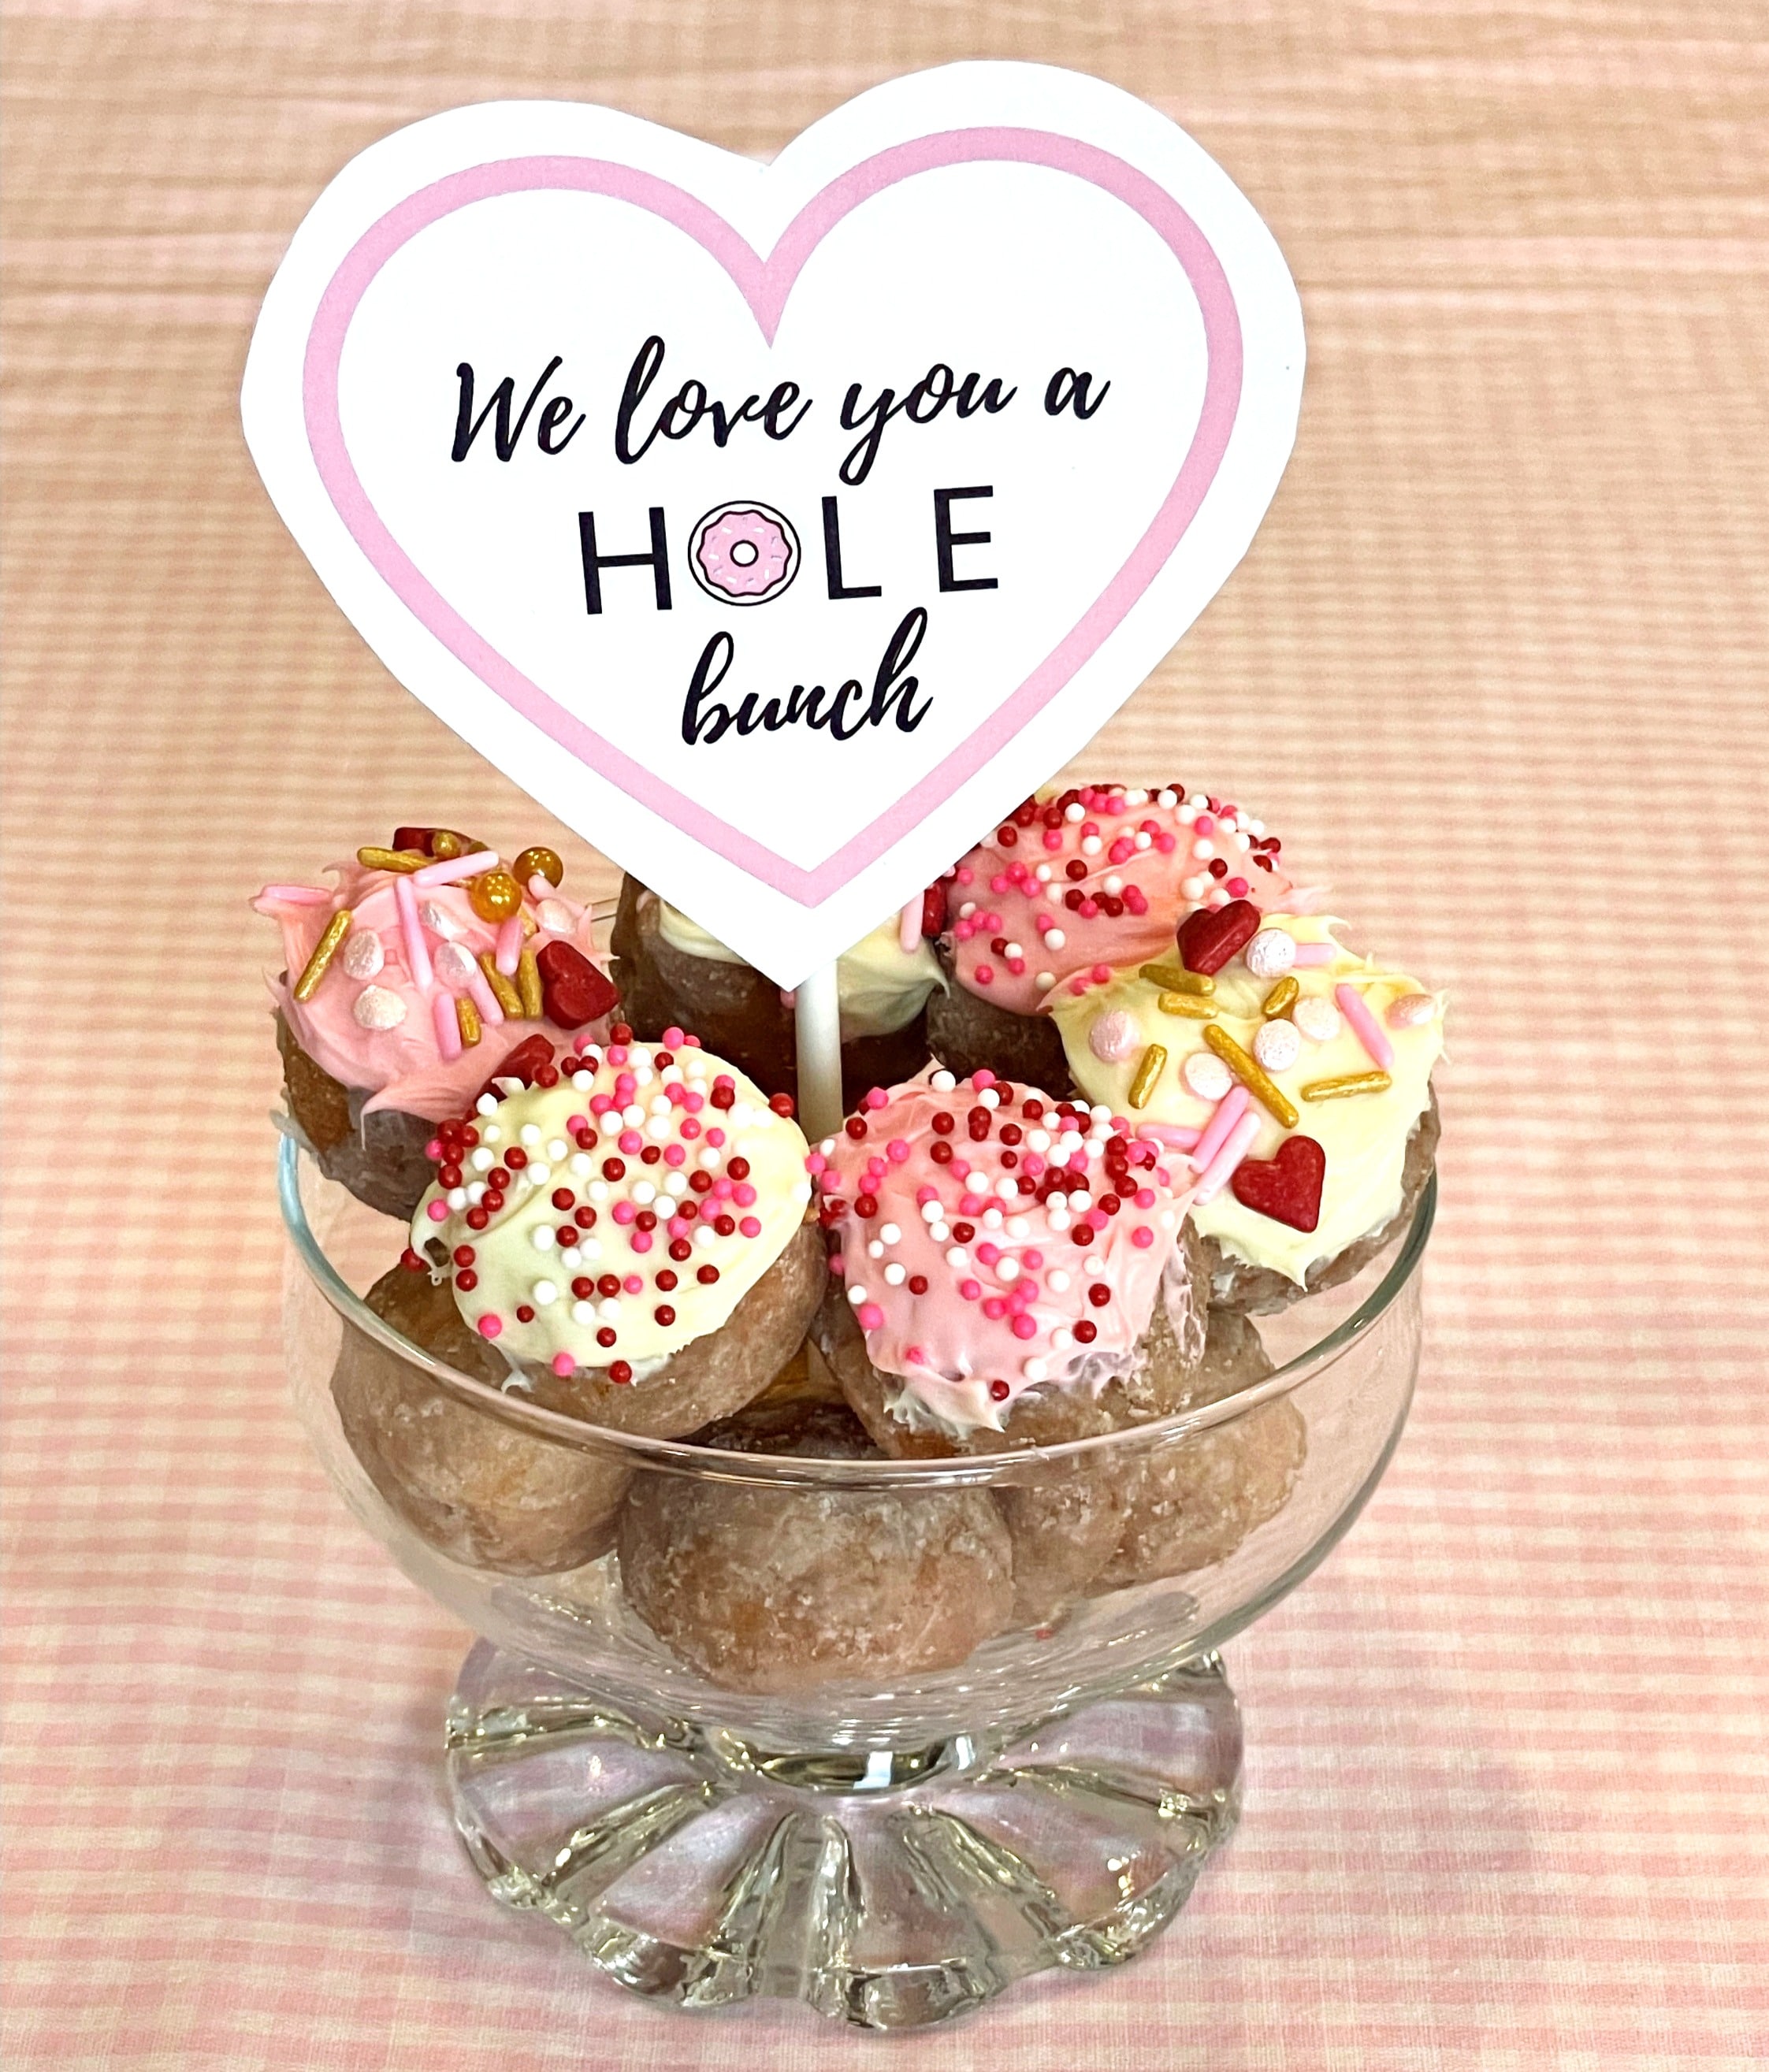 We love you a "hole bunch" donut hole breakfast